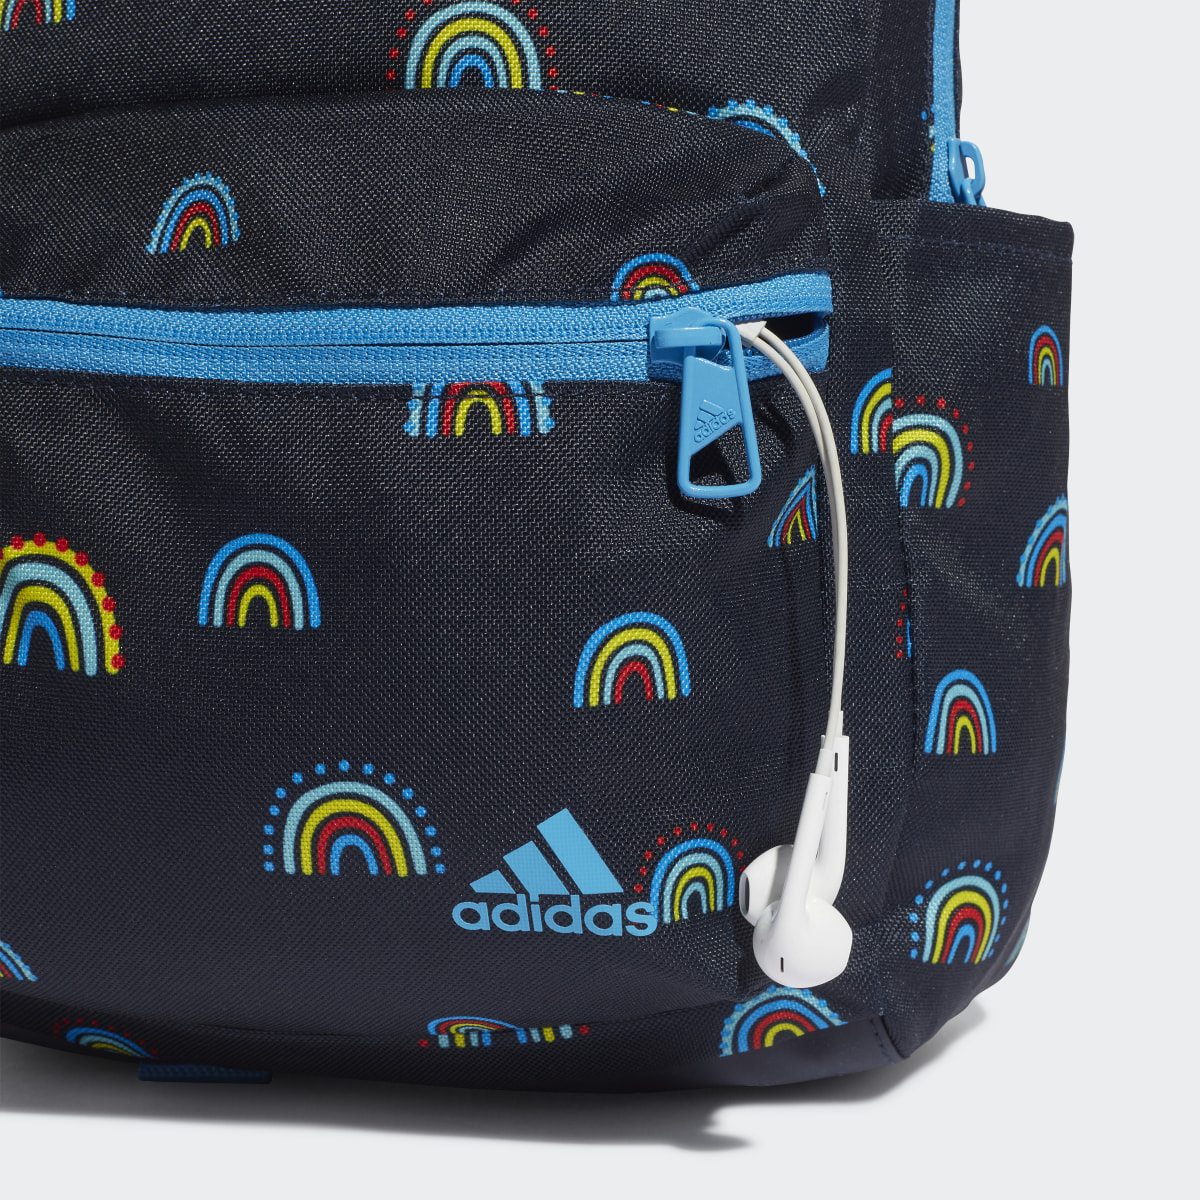 Adidas Rainbow Backpack. 6